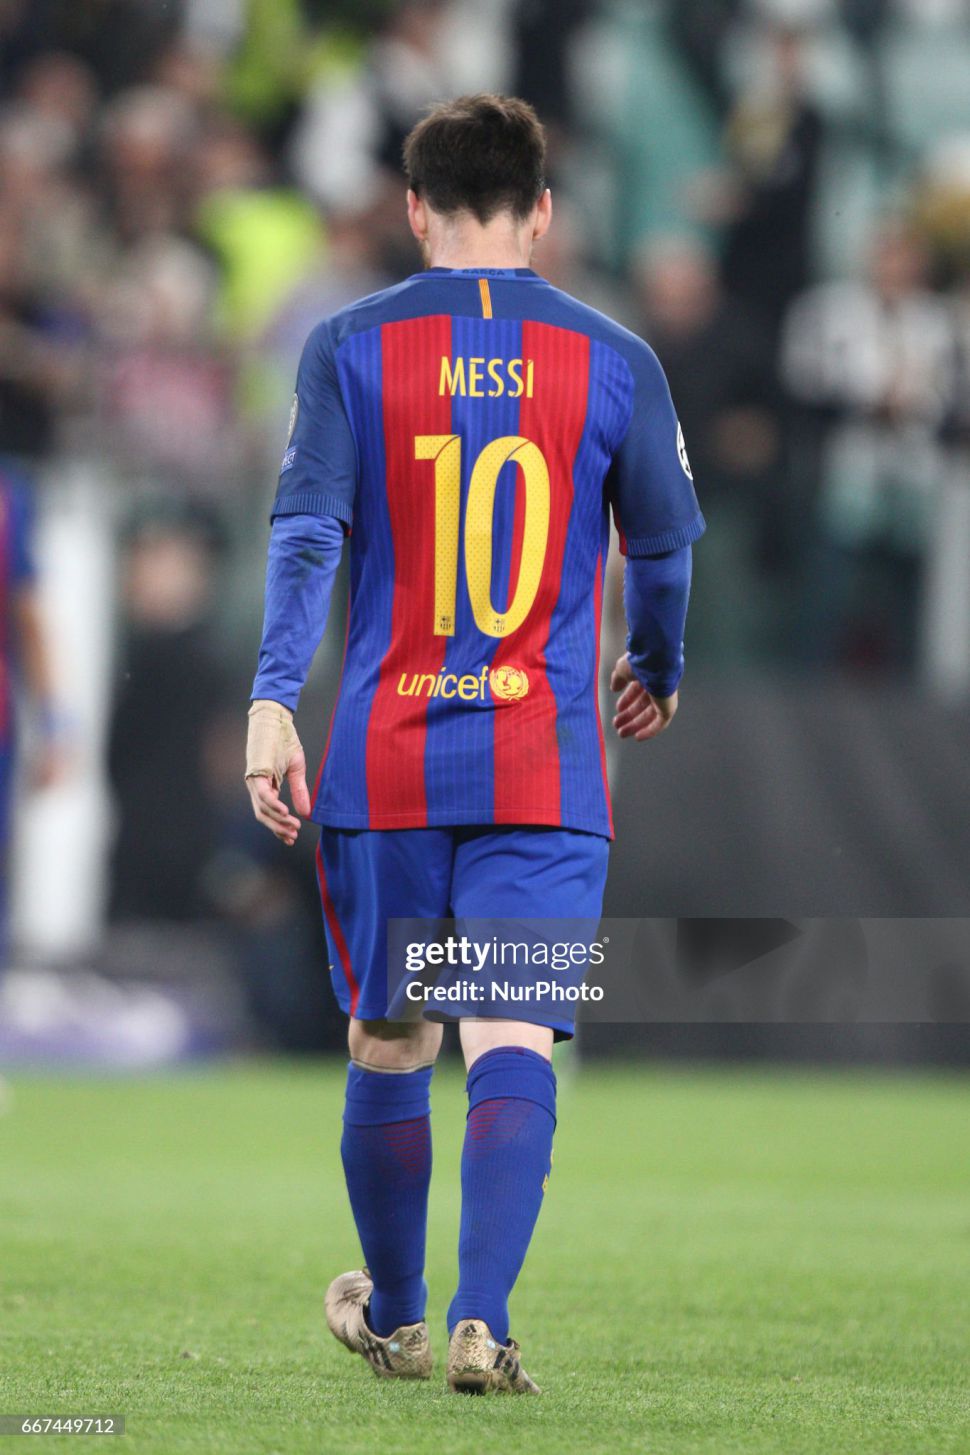 Font Messi 10 Barcelona 2016 2017 nameset home player official